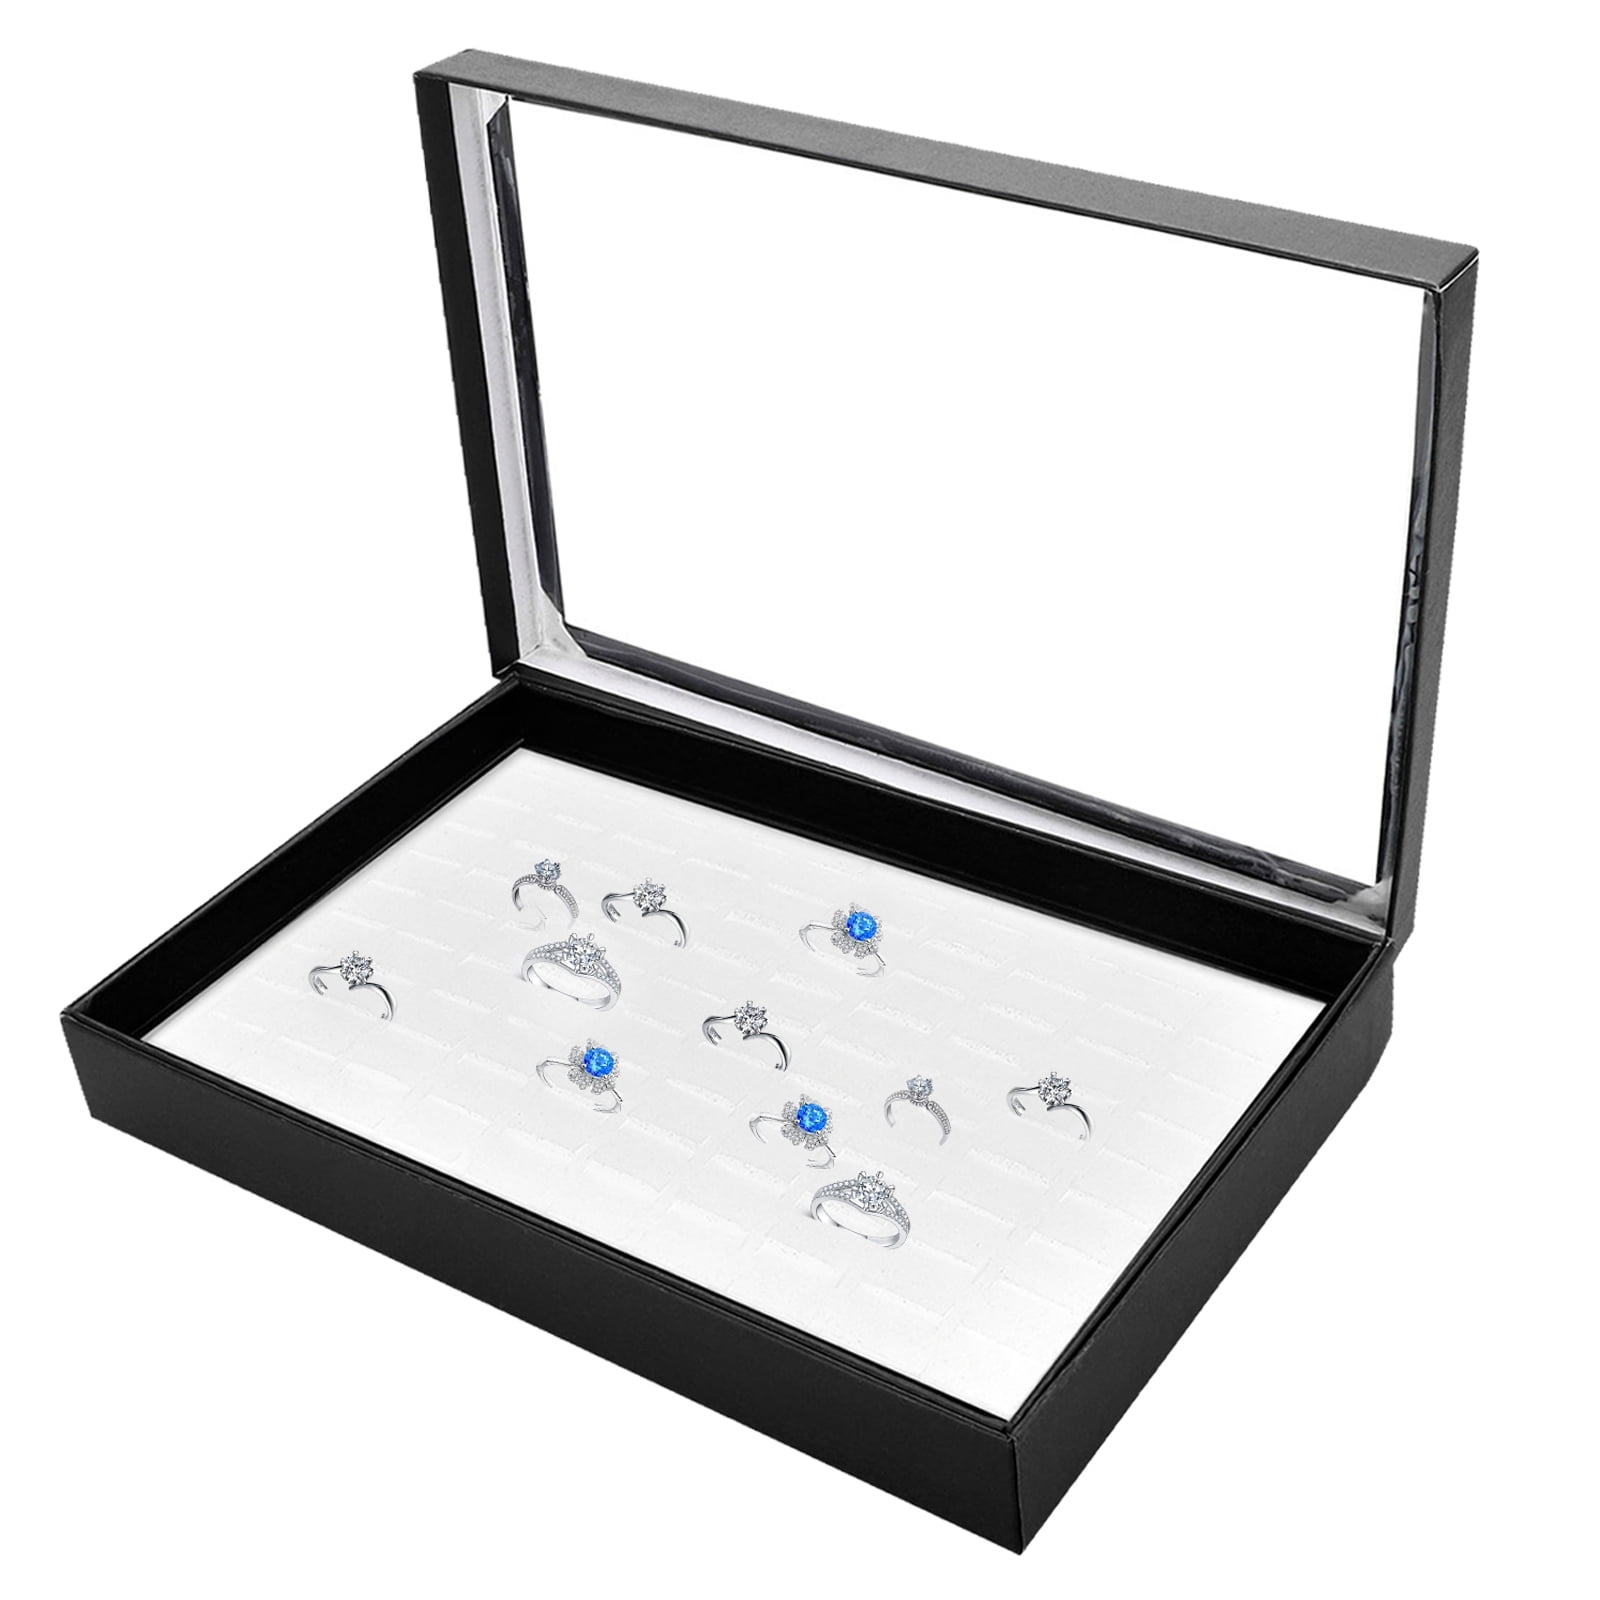 100 Slots Jewelry Ring Display Organizer Case Tray Holder Earring Storage Box 